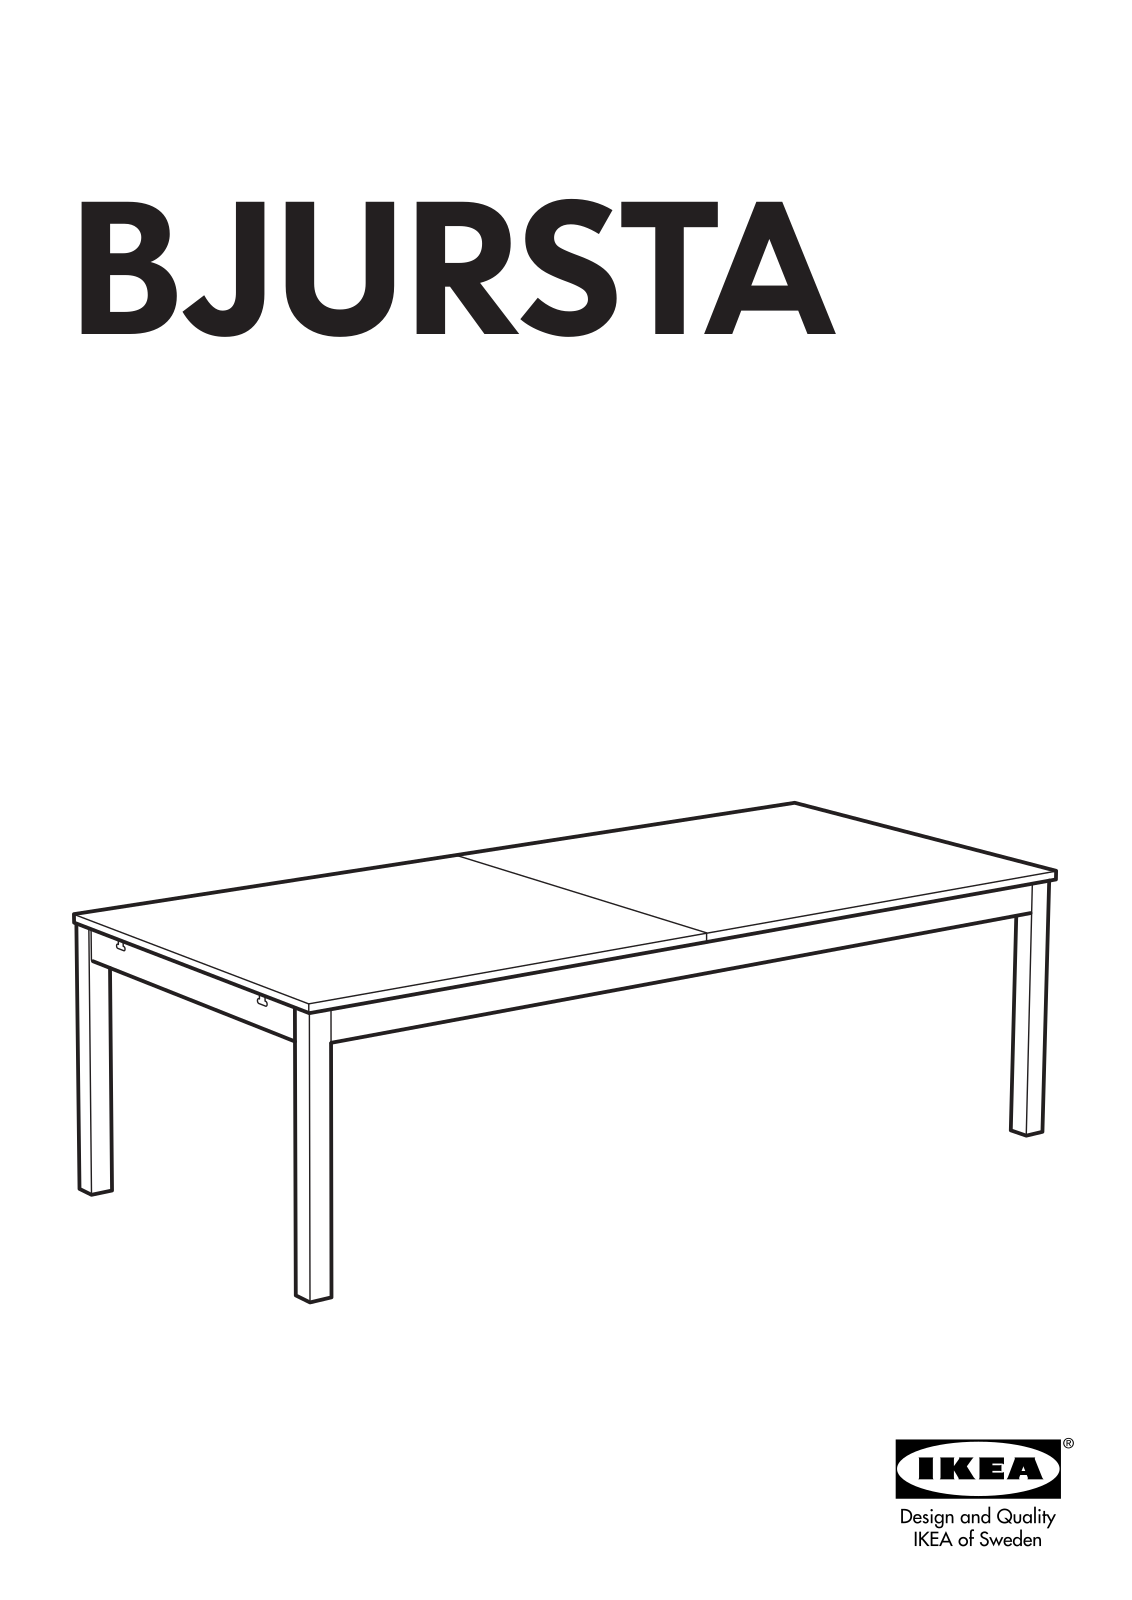 IKEA BJURSTA DINING TABLE 94X114X133 User Manual